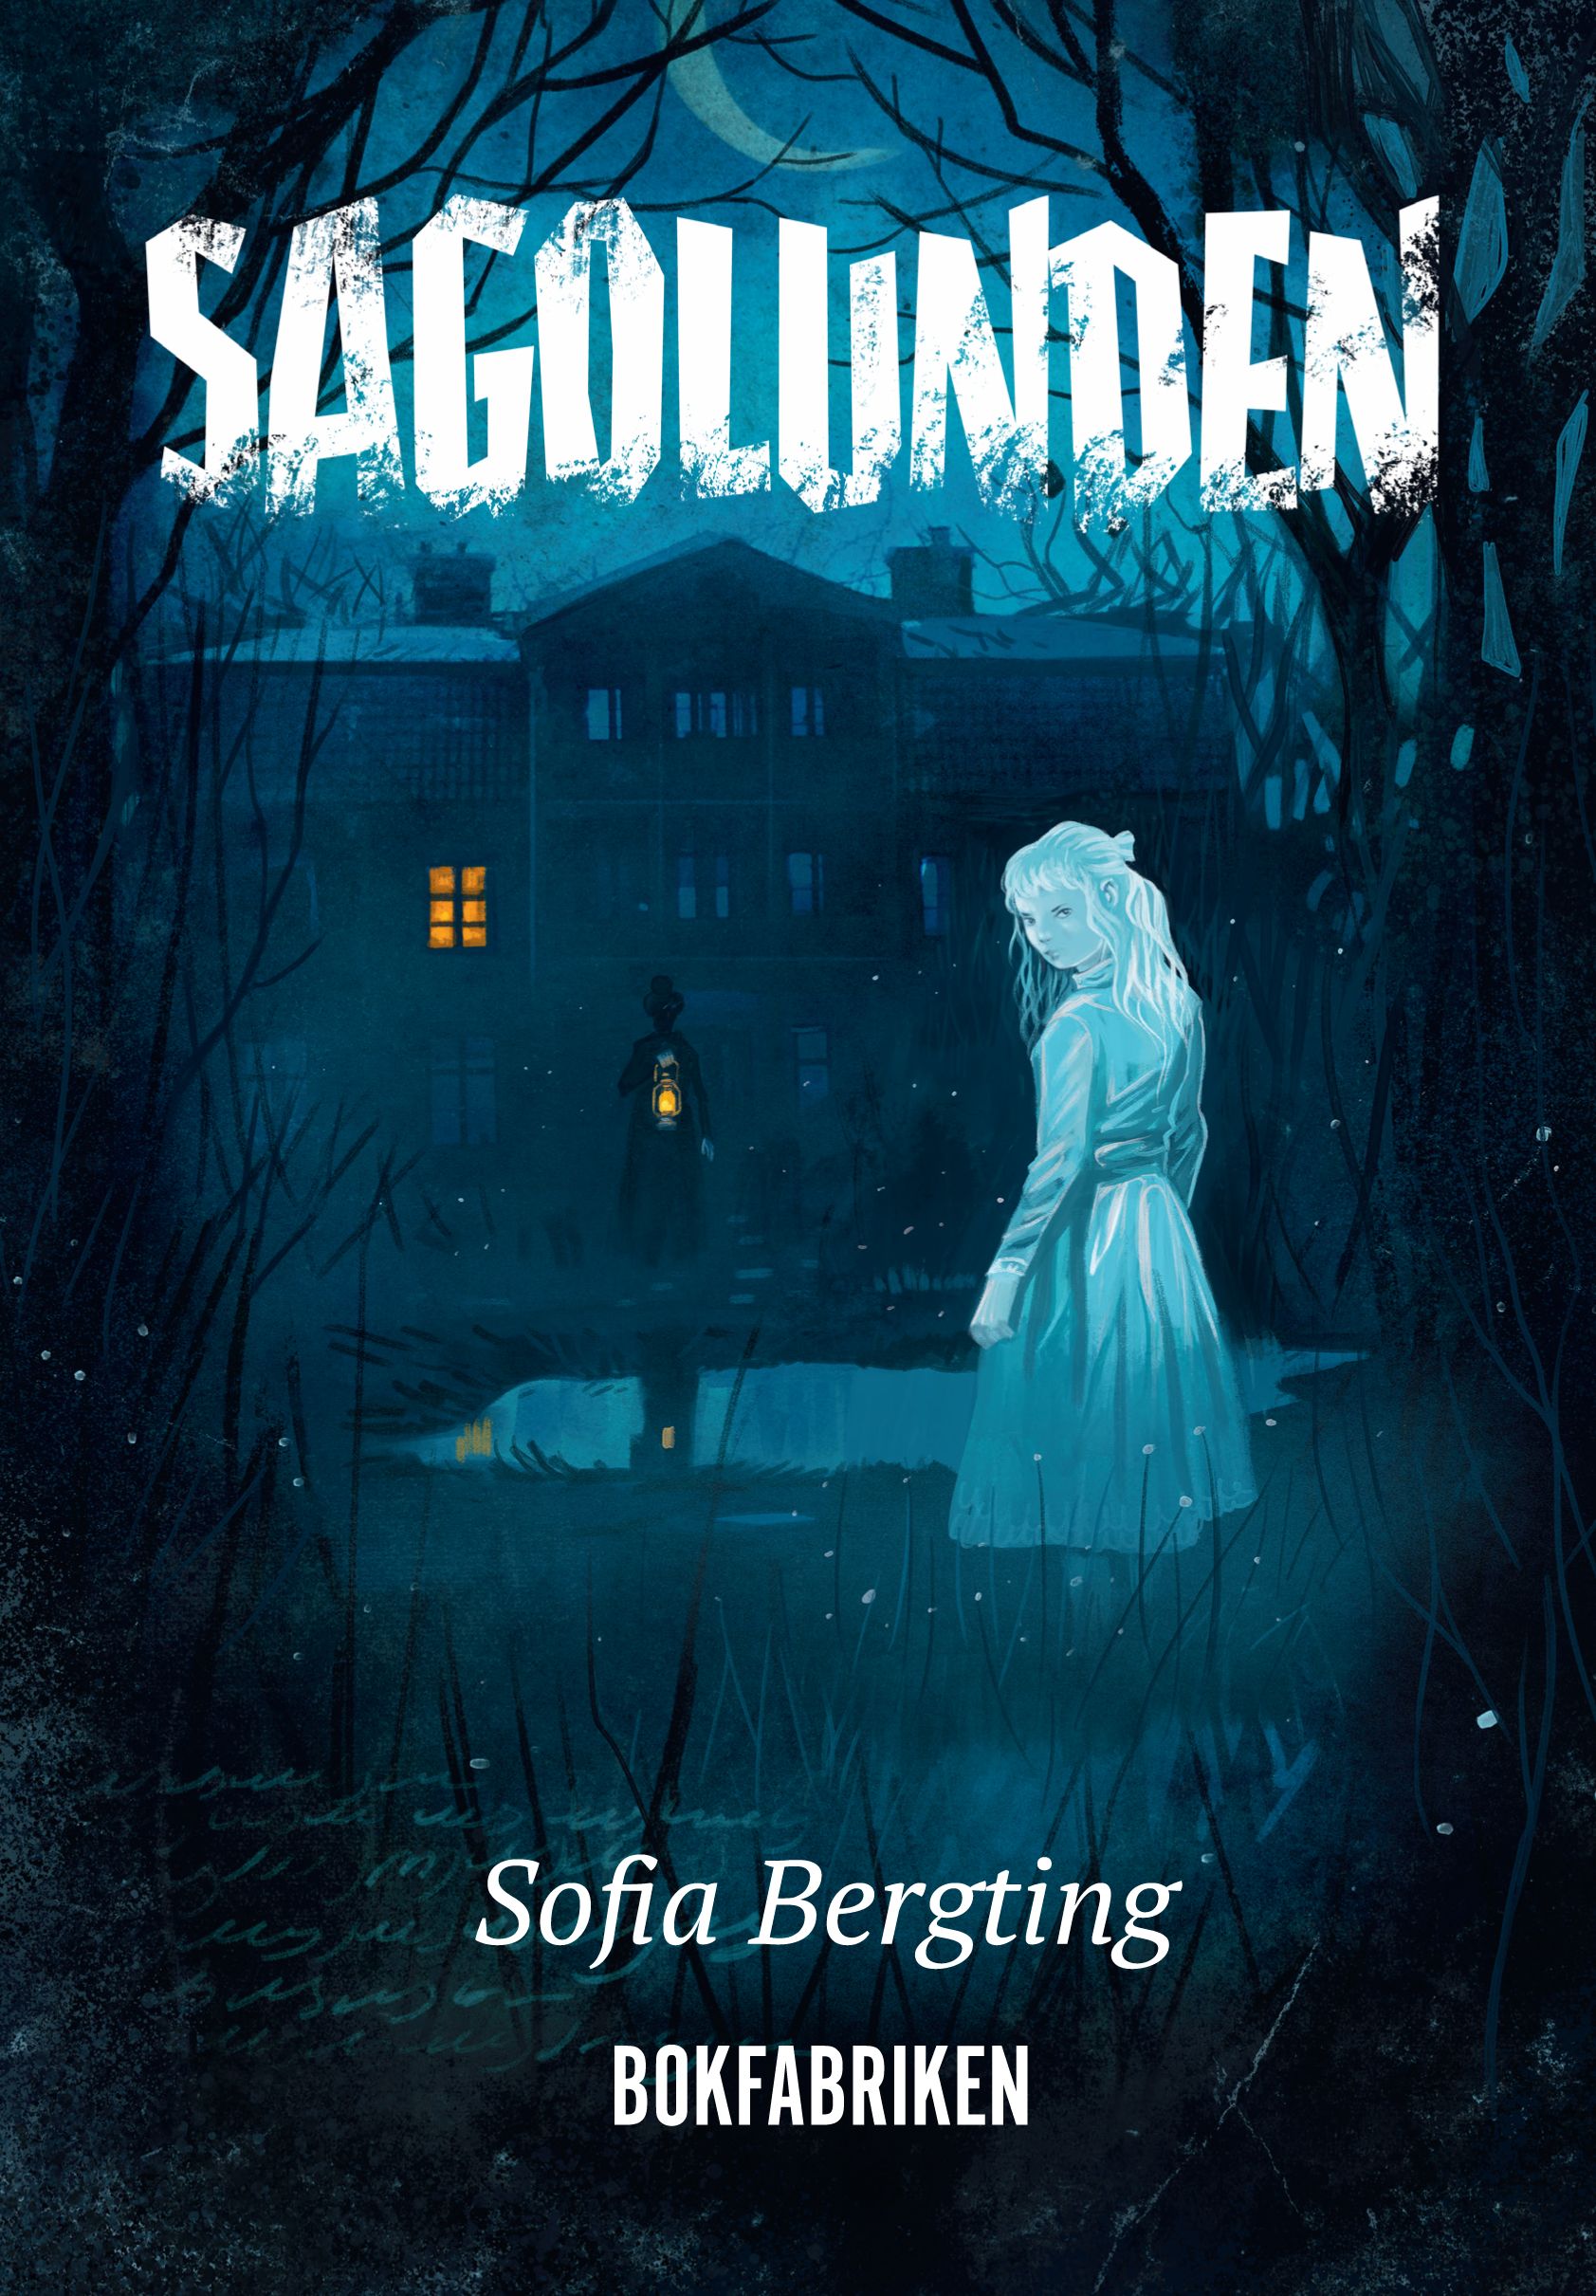 Sagolunden, eBook by Sofia Bergting